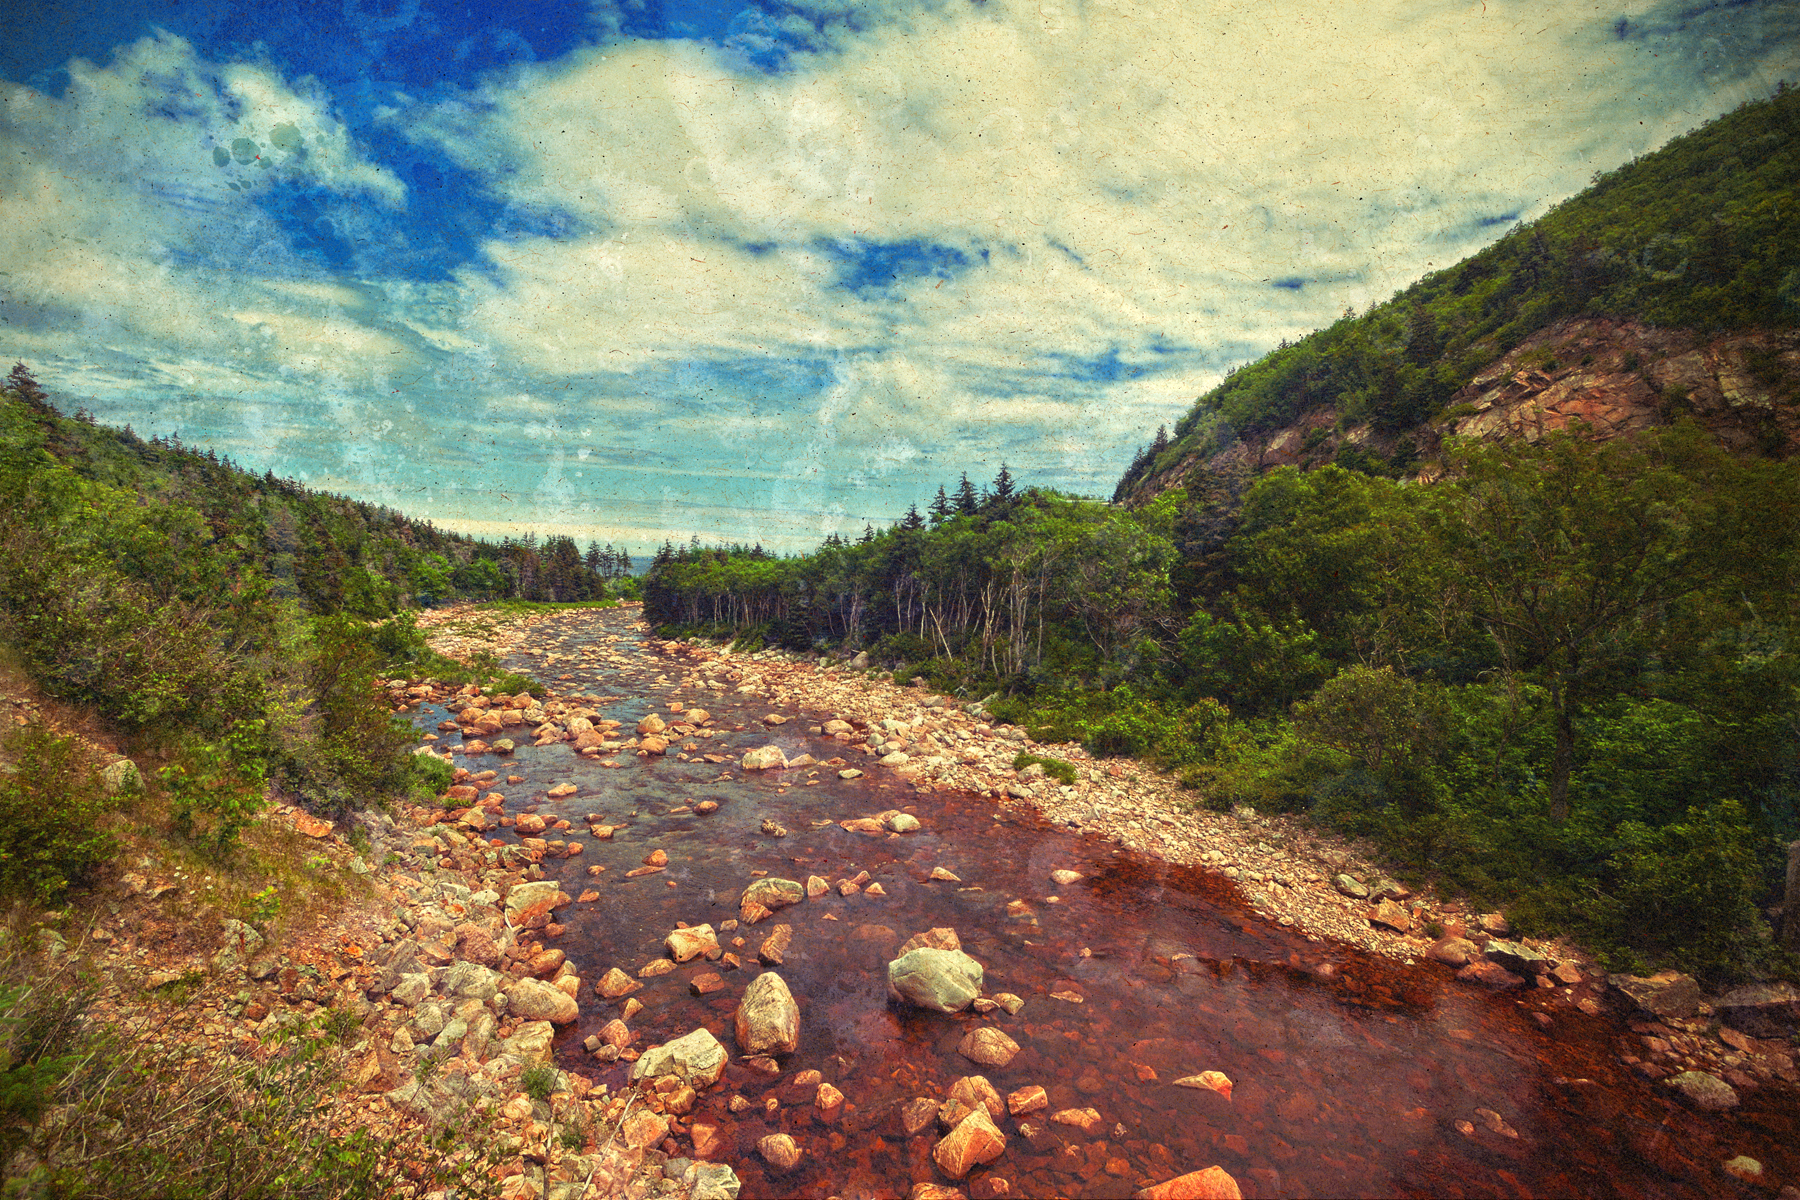 Cabot trail scenery - retro style photo